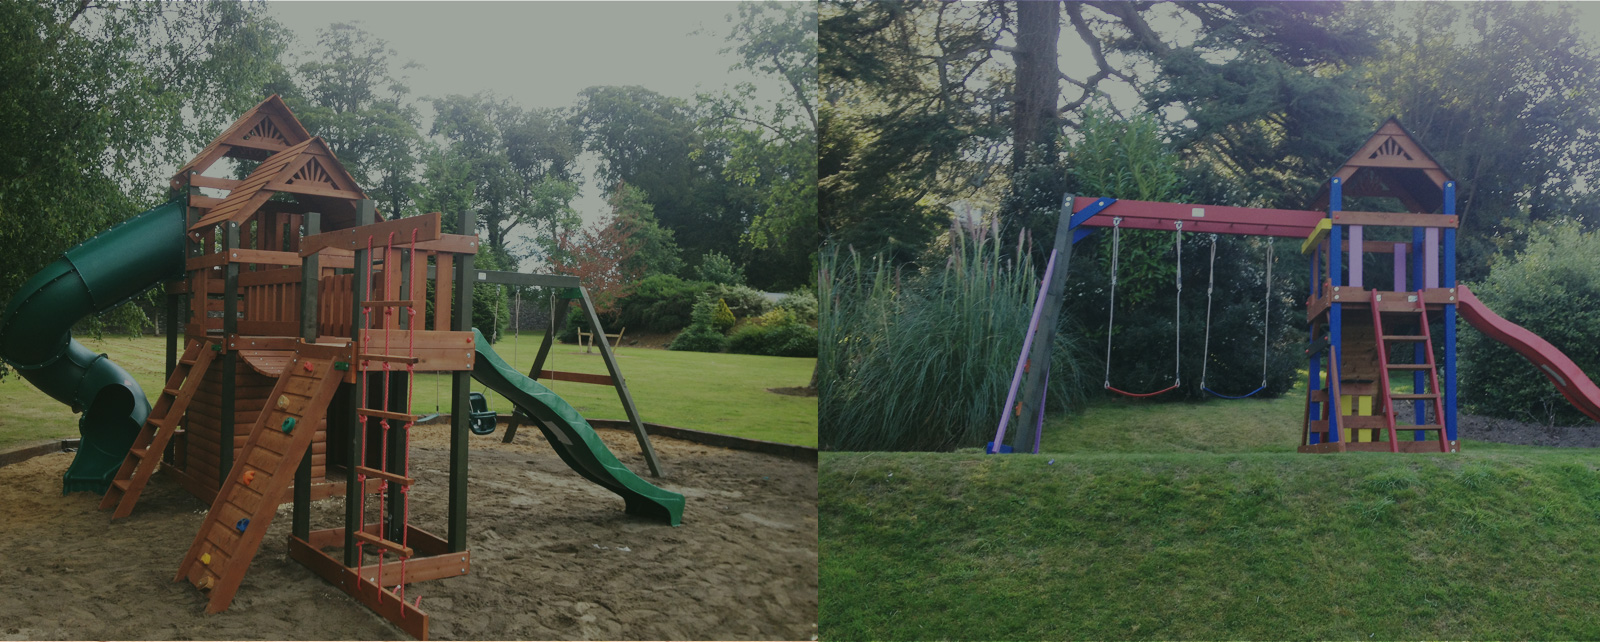 Garden Fun Swings Slides Playcentres (8)